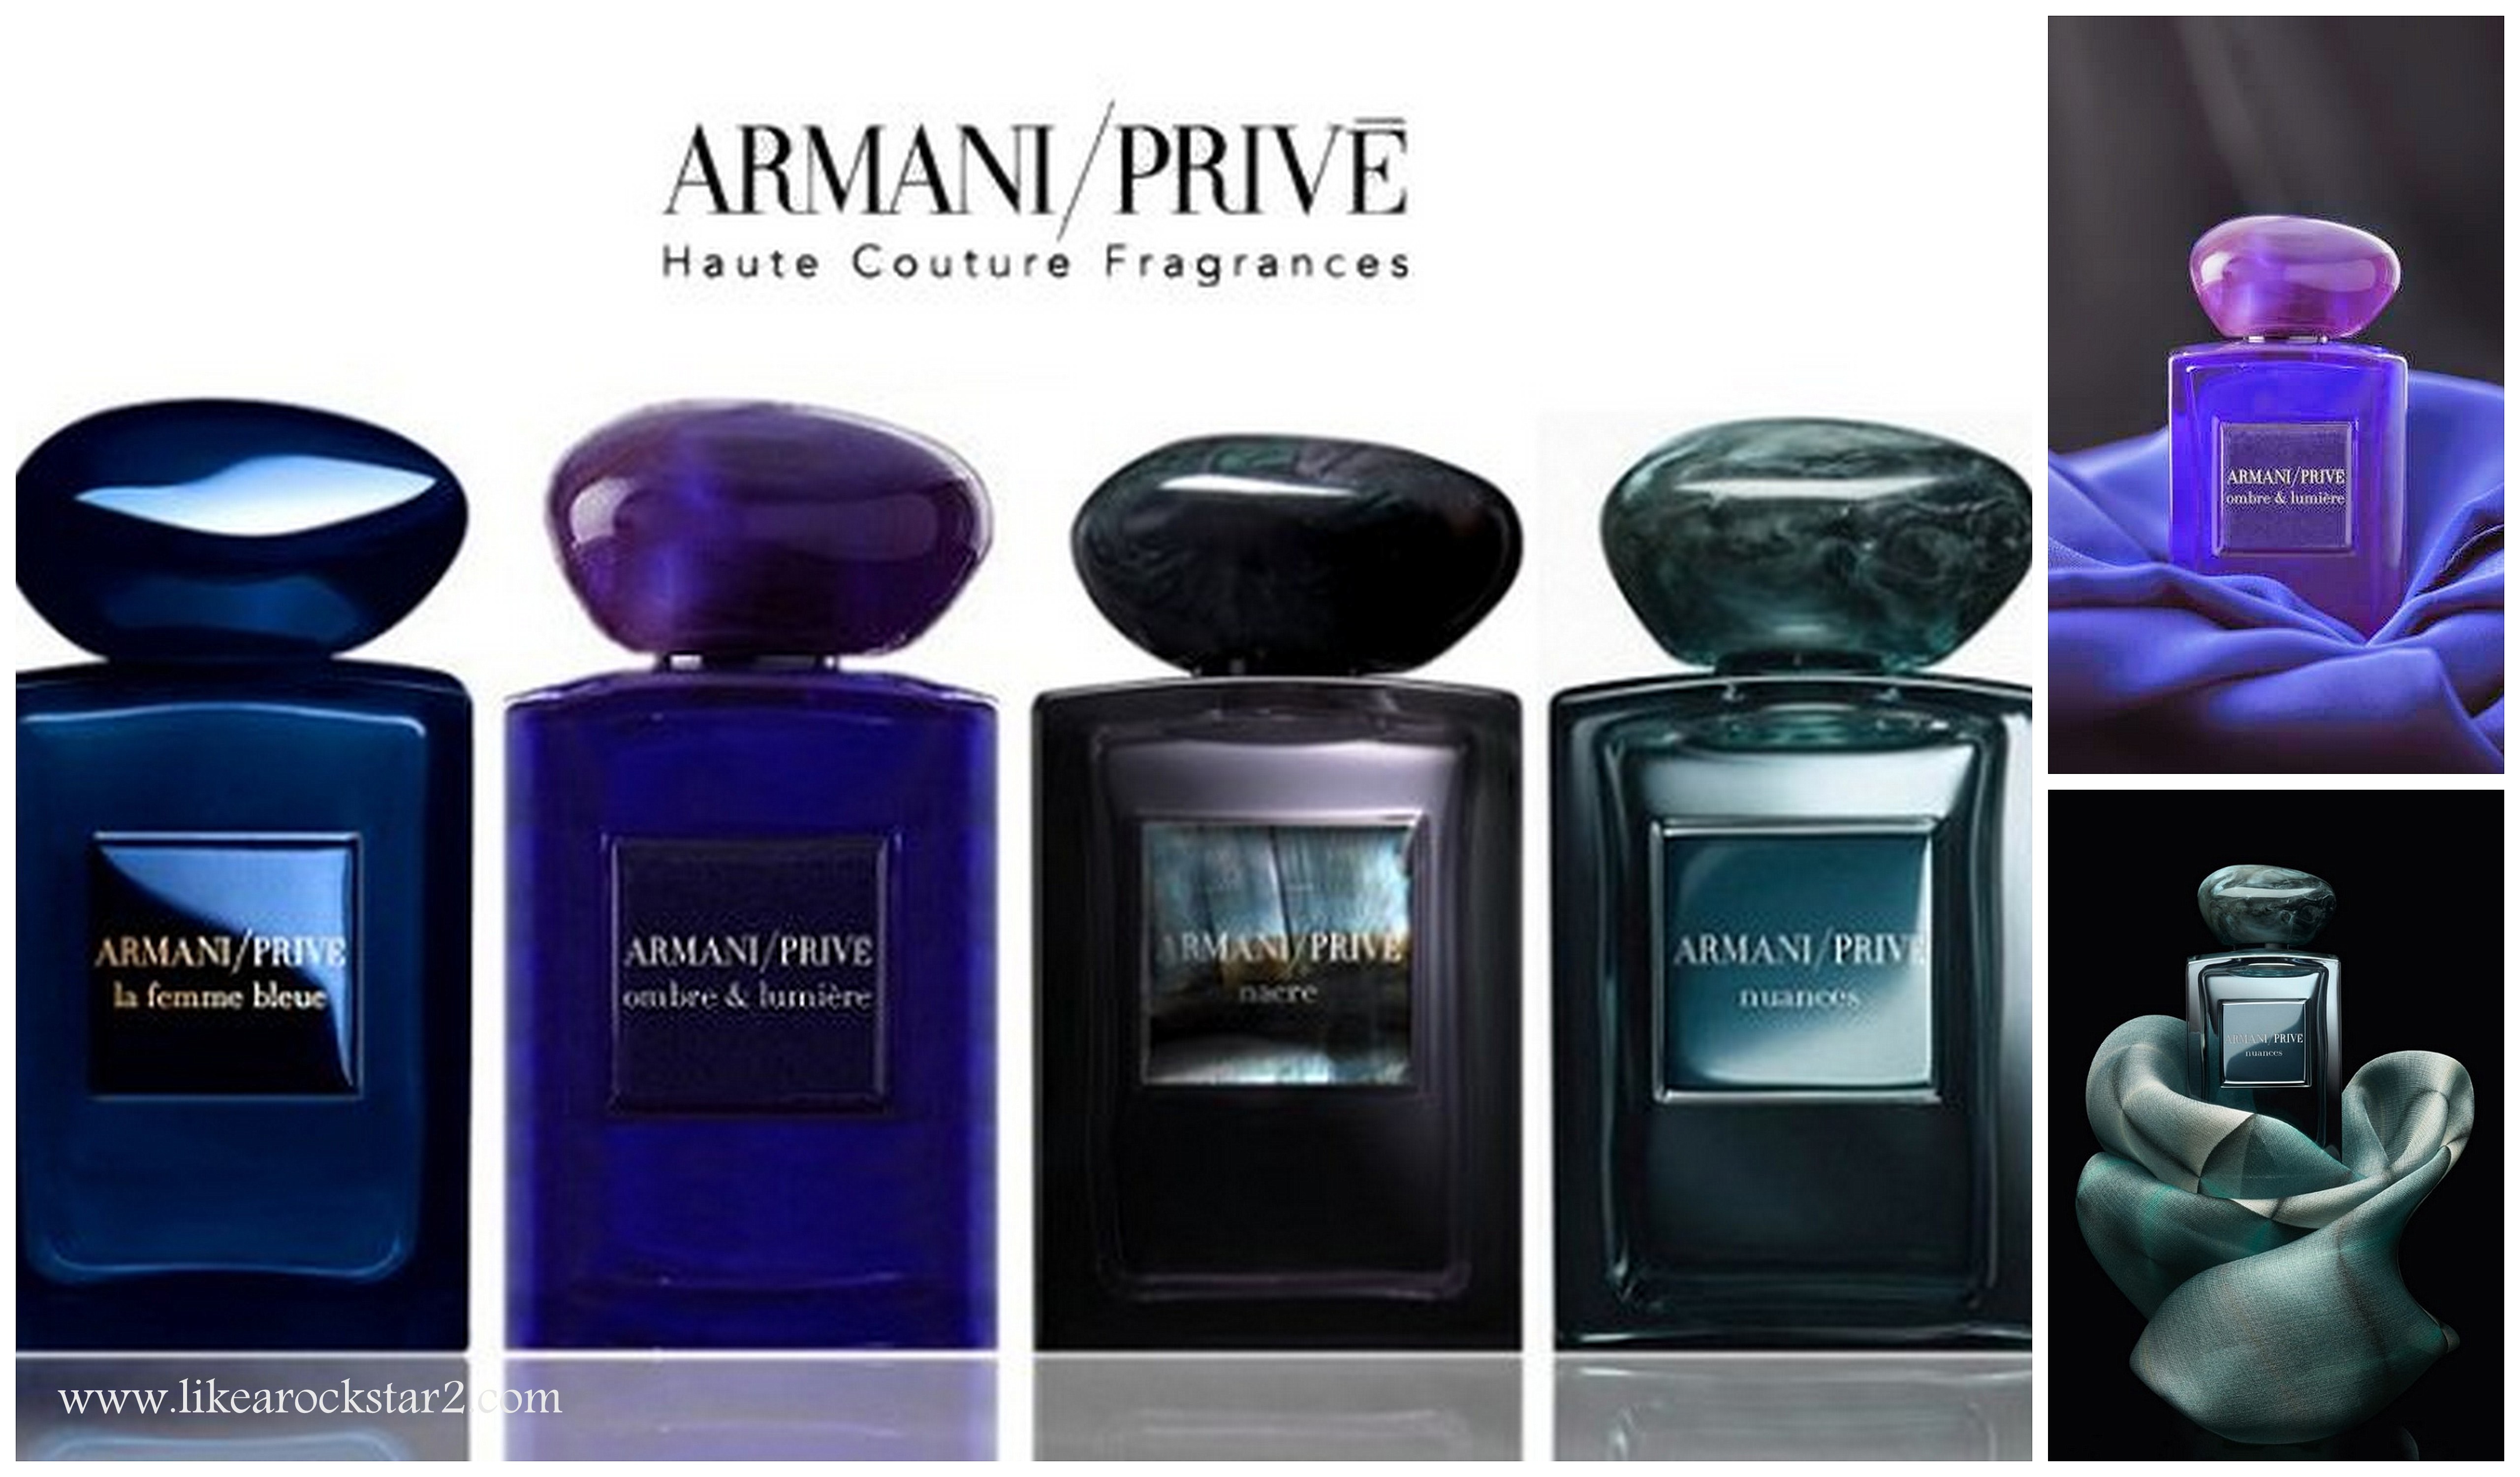 Armani Prive Haute Couture Fragrances Price Outlet, SAVE 51%.